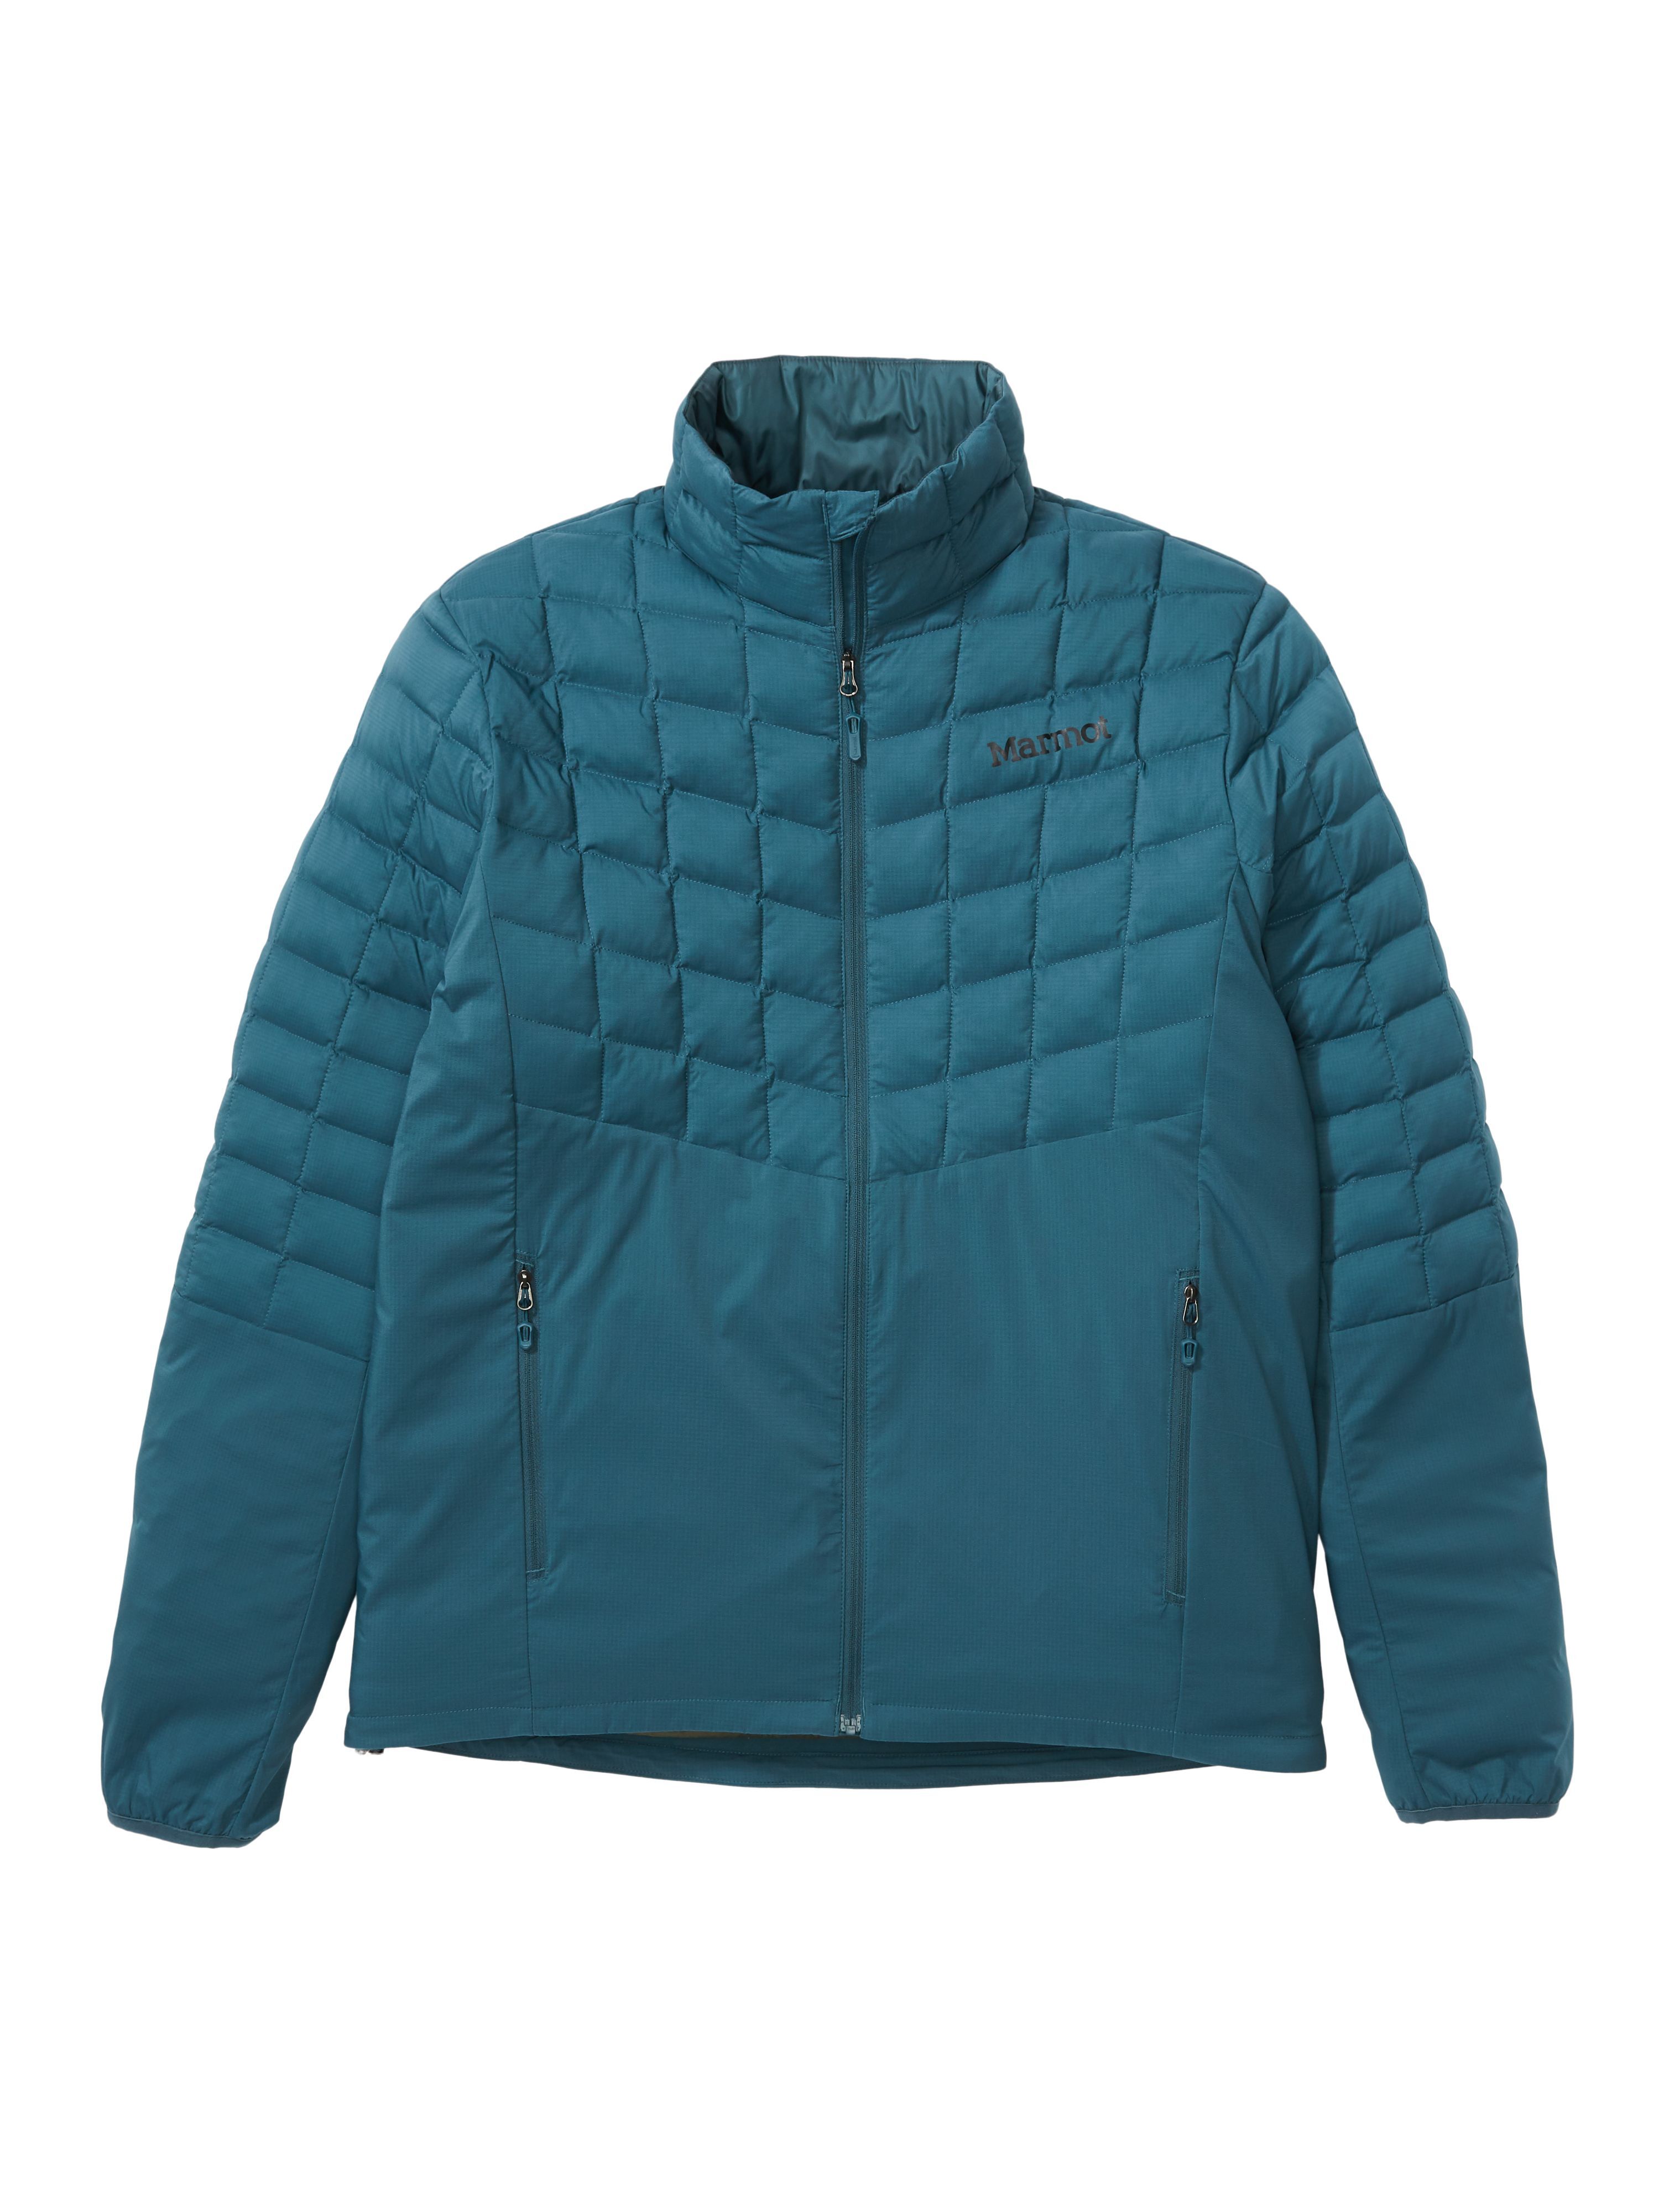 Marmot - Departer Jkt - Ski jacket - Men's